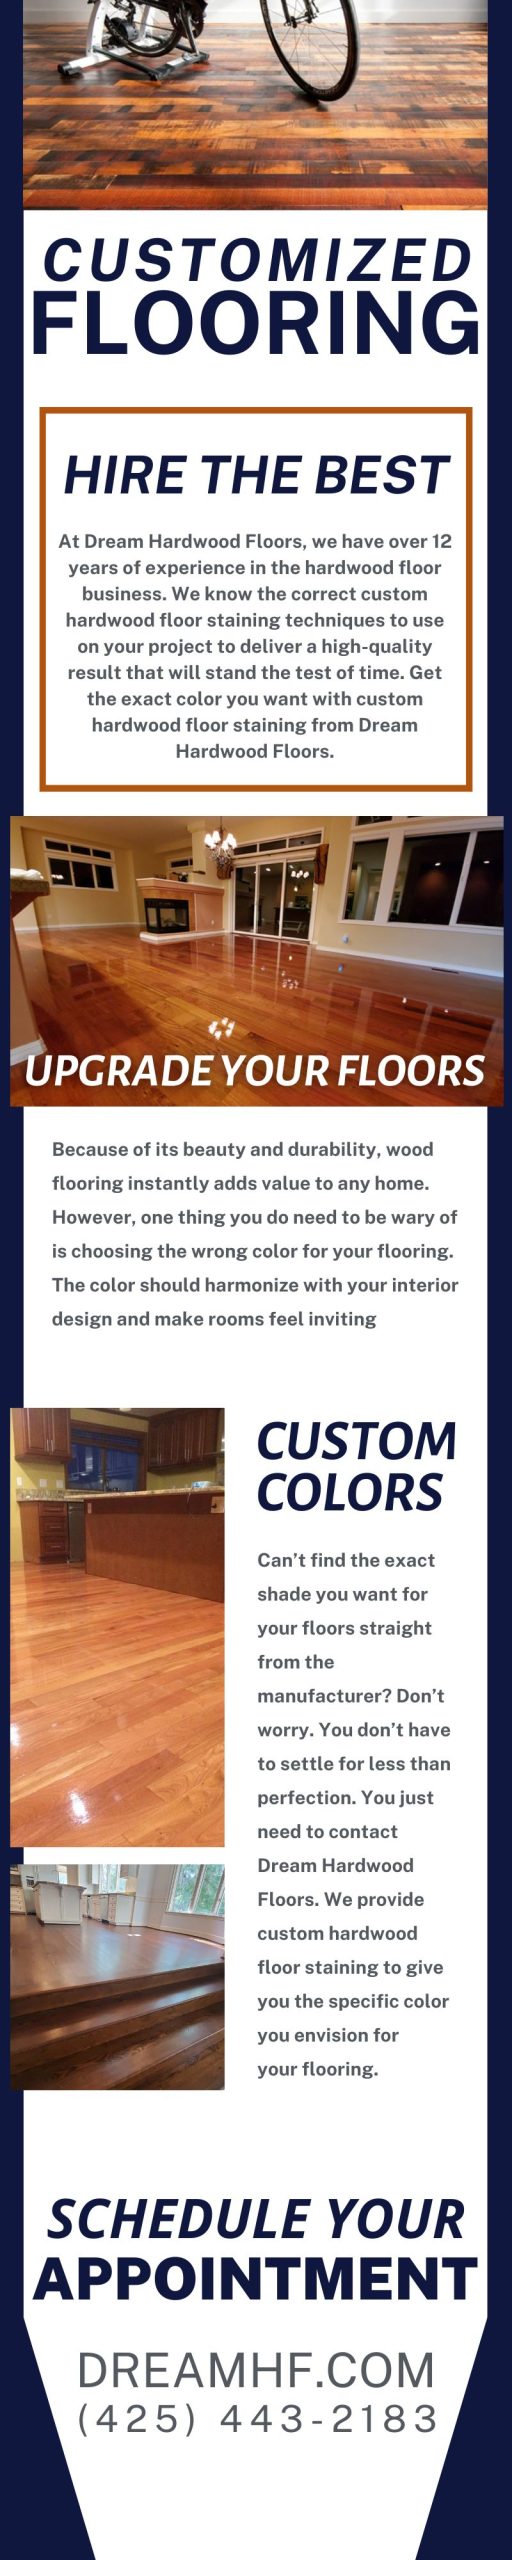 Customized Flooring! 3